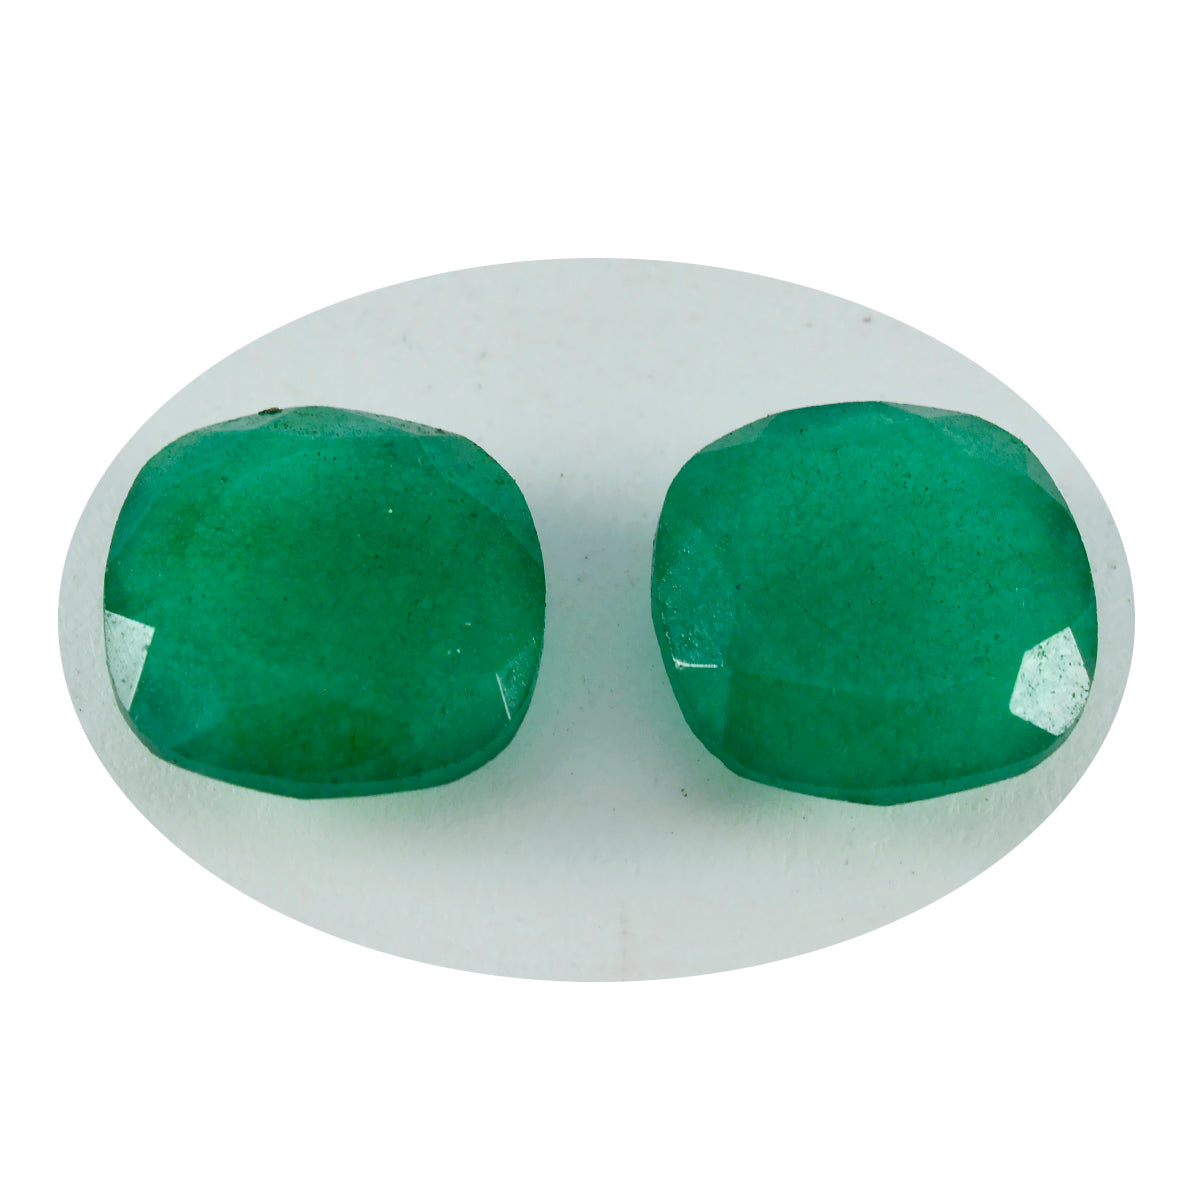 Riyogems 1PC Natural Green Jasper Faceted 11x11 mm Cushion Shape good-looking Quality Loose Gem